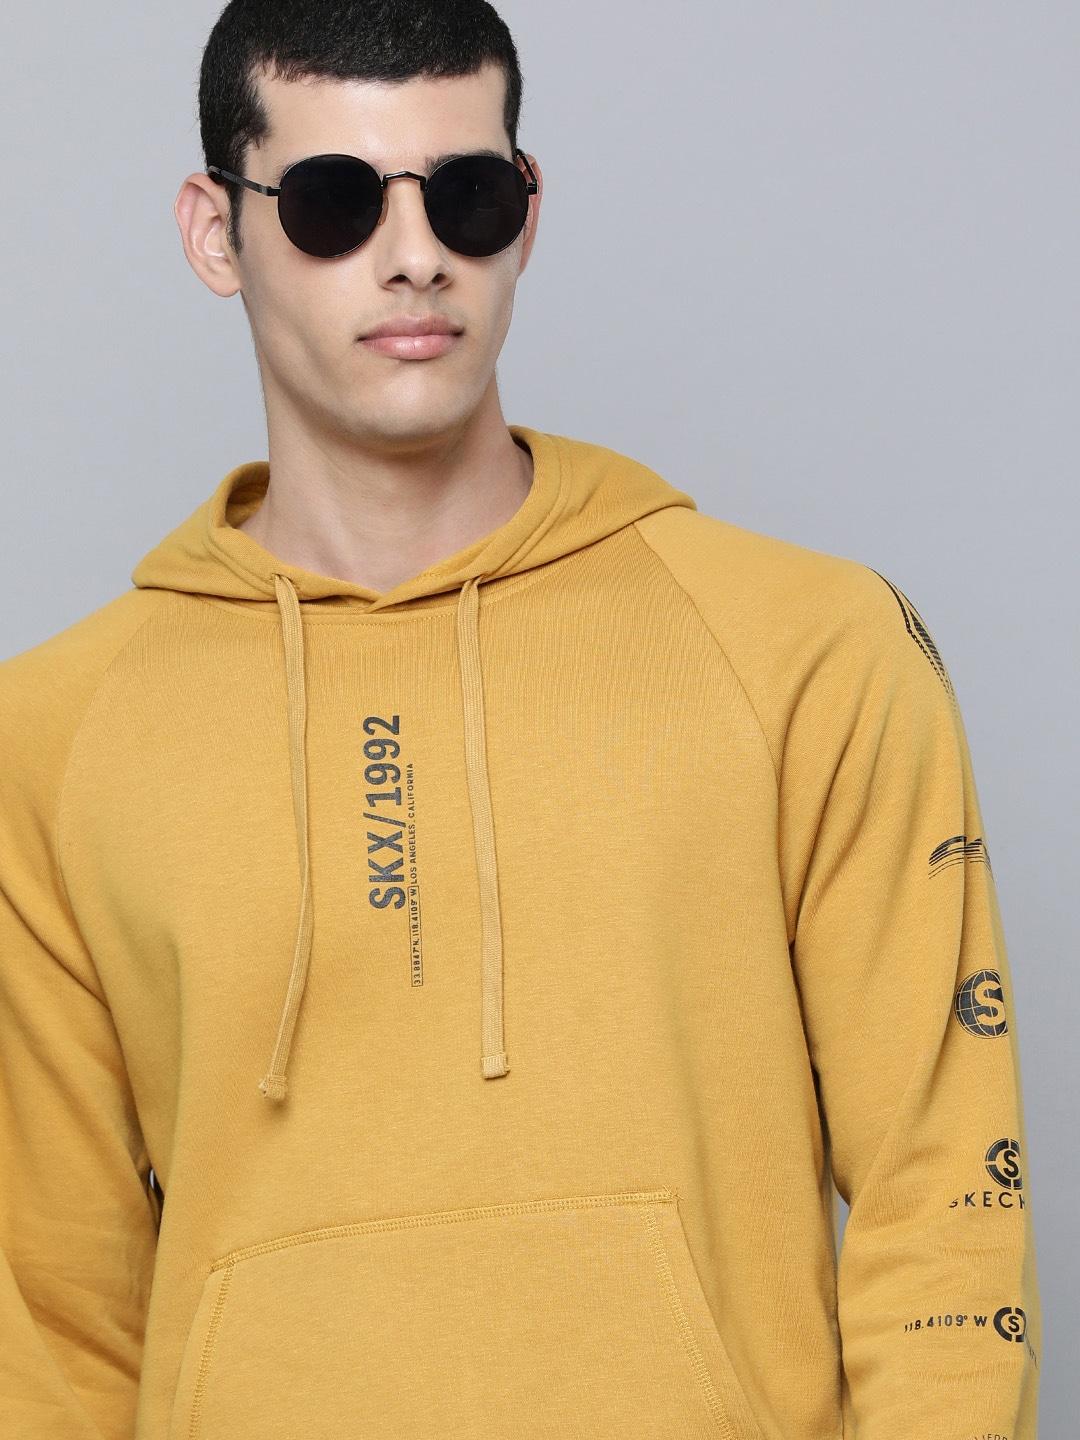 skechers-men-mustard-yellow-typography-print-skx-varocity-hooded-pullover-sweatshirt